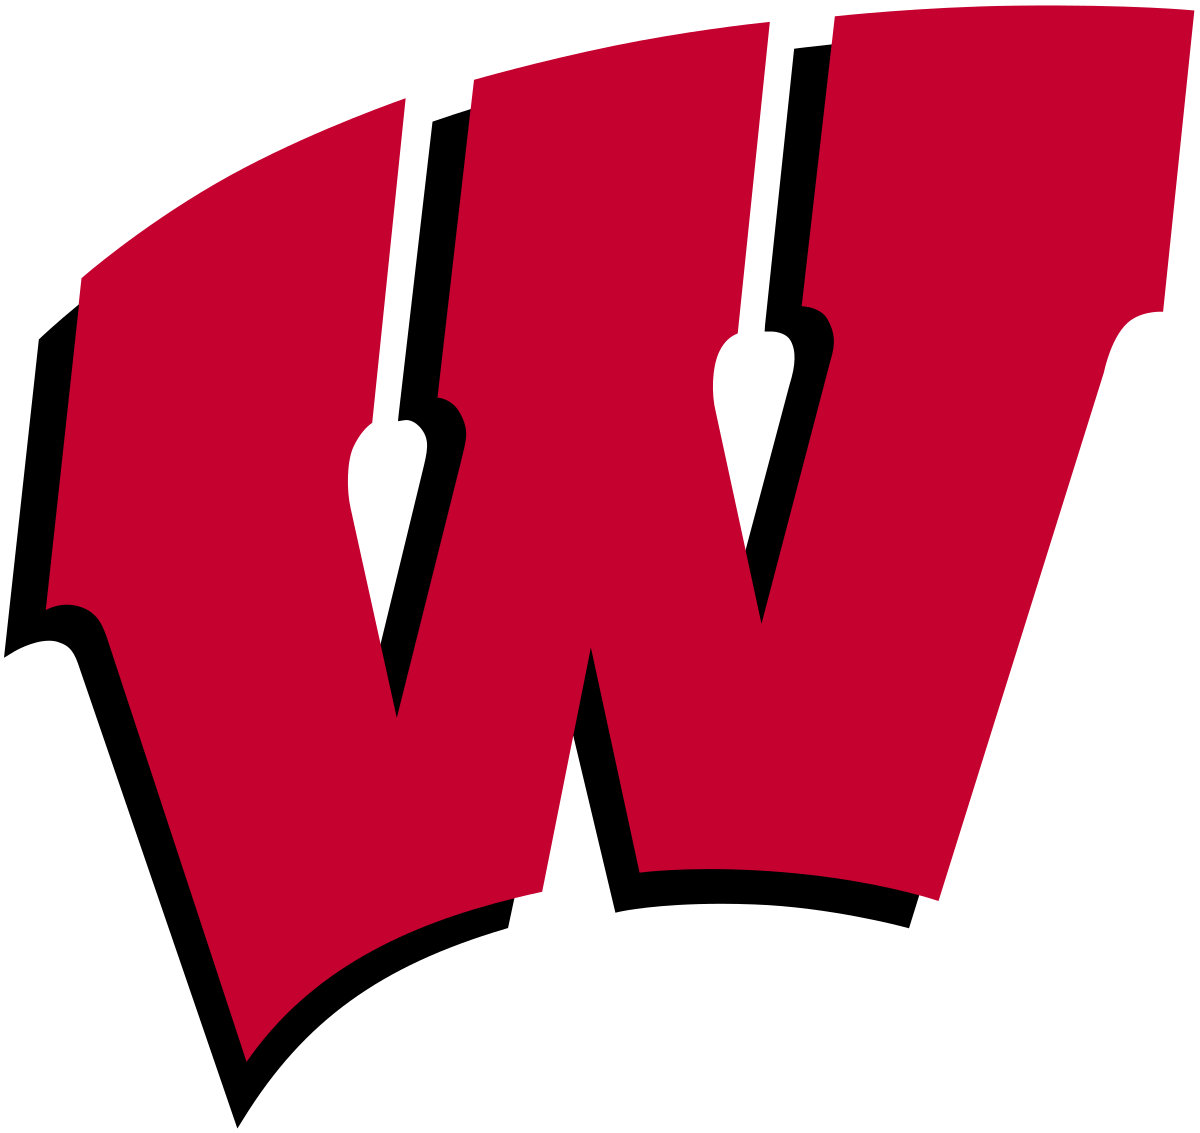 University Of Wisconsin